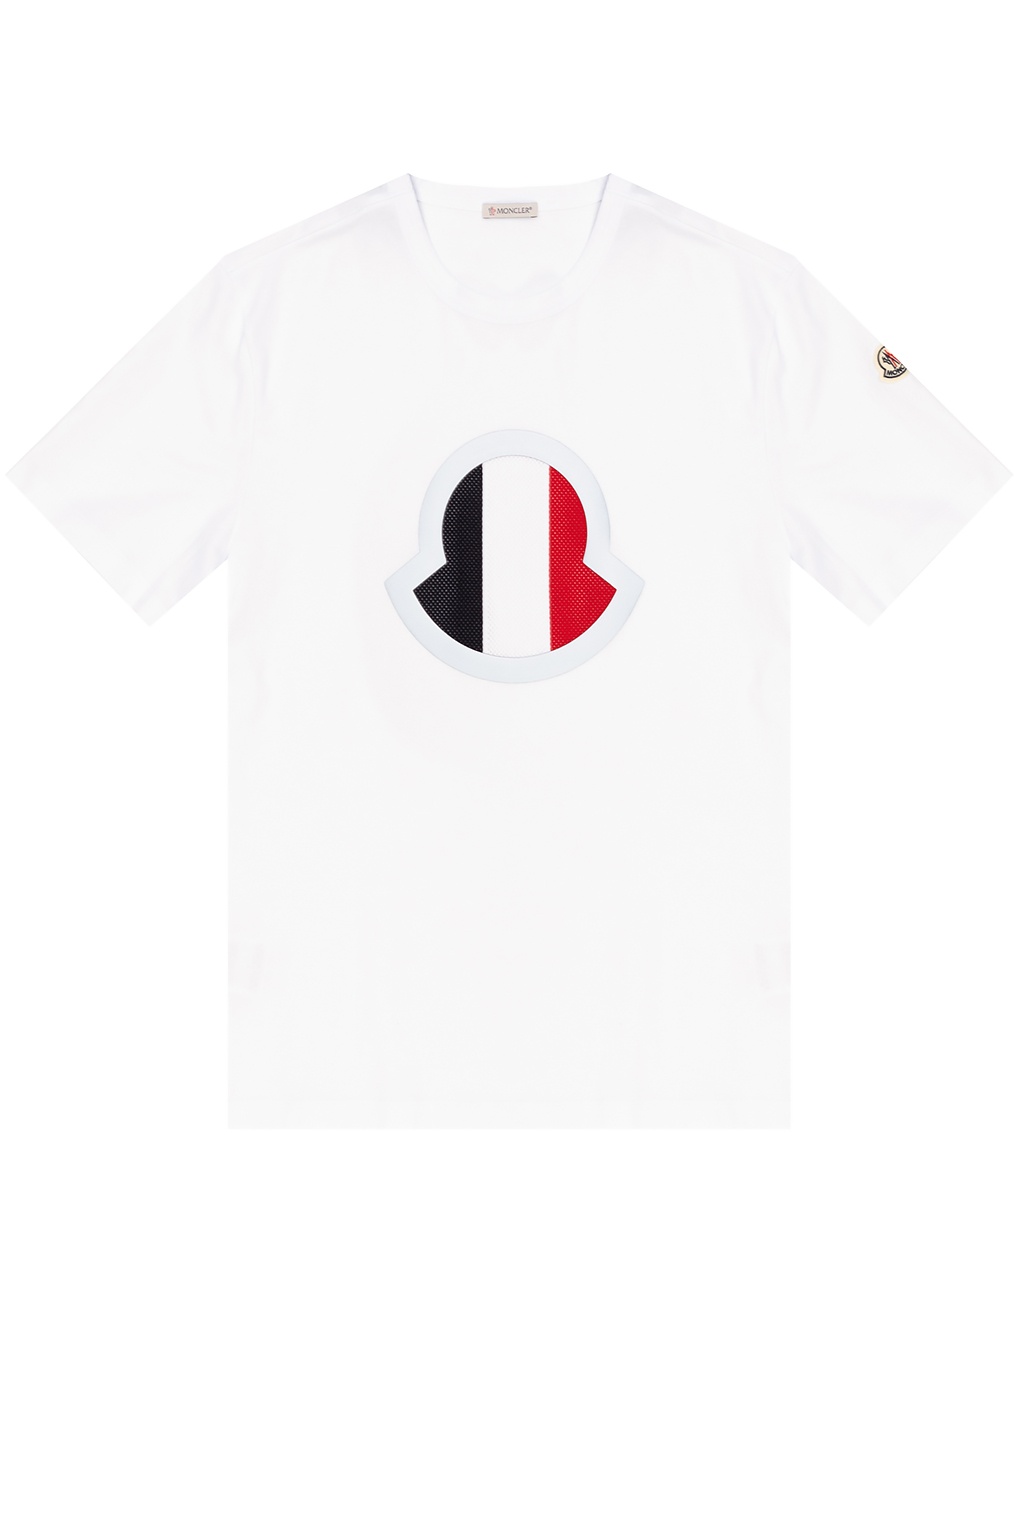 Moncler T-shirt with logo, Men's Clothing